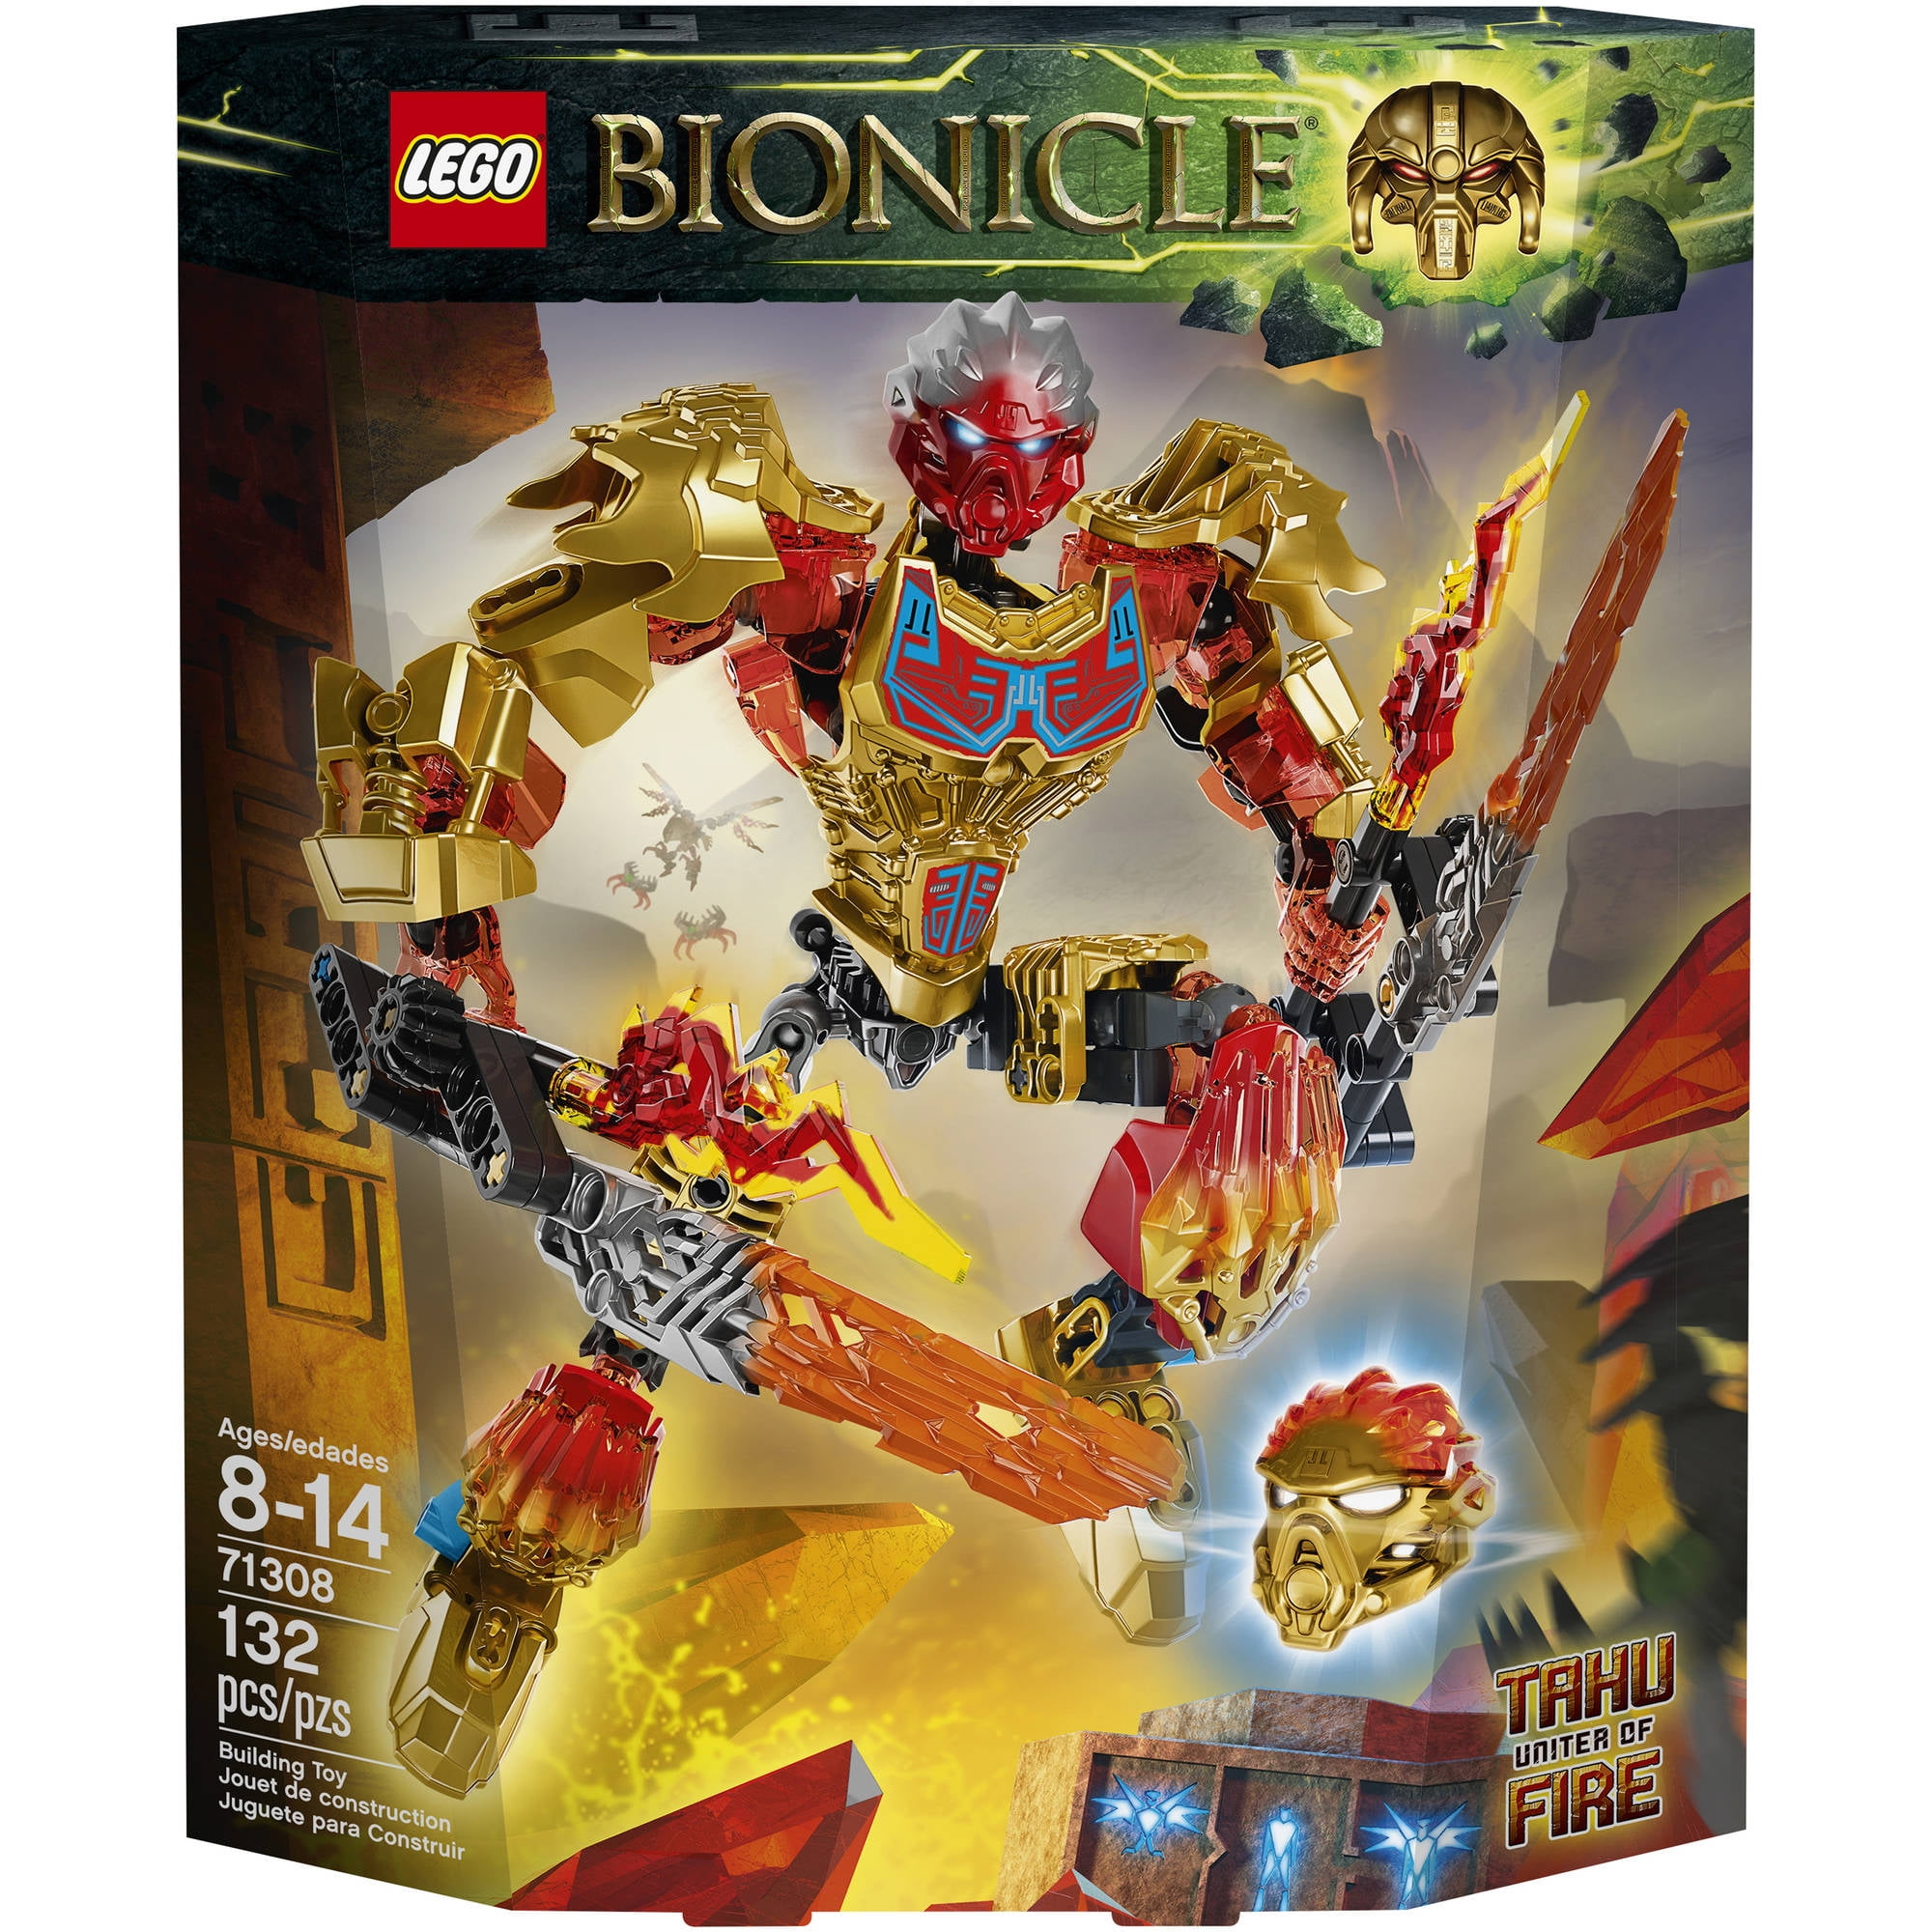 LEGO Bionicle Tahu Uniter of Fire 71308 